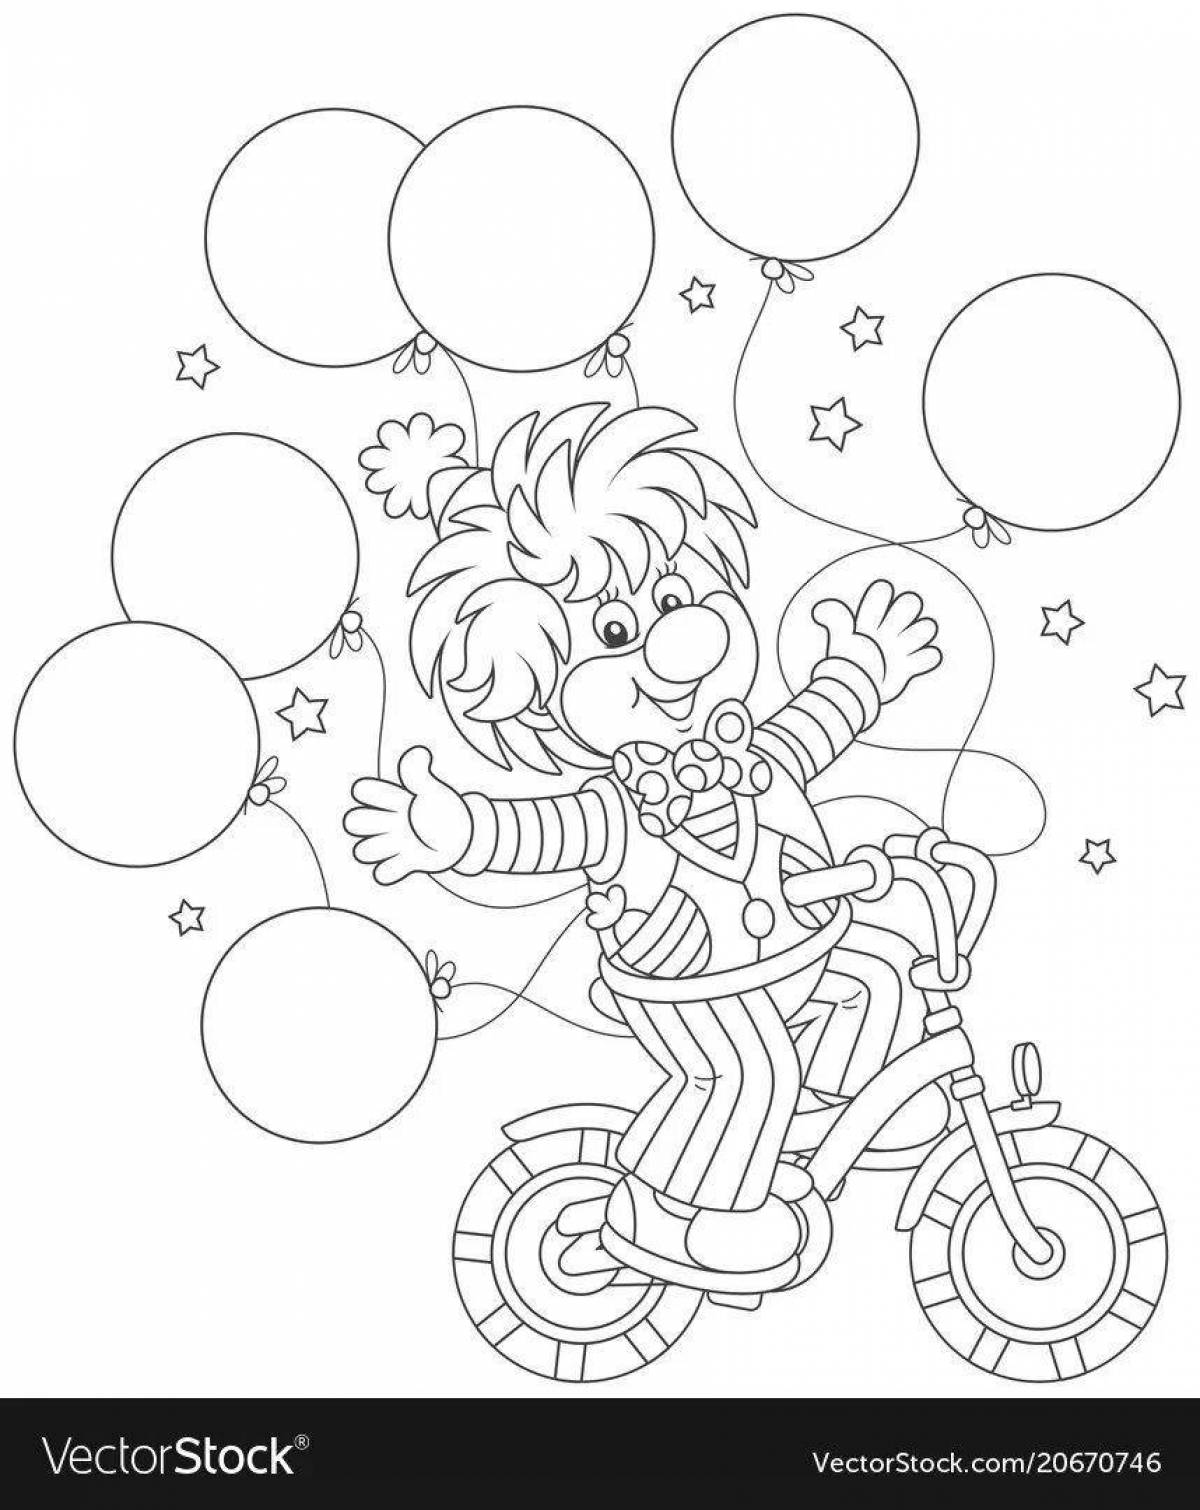 Хихикающий клоун с воздушными шарами